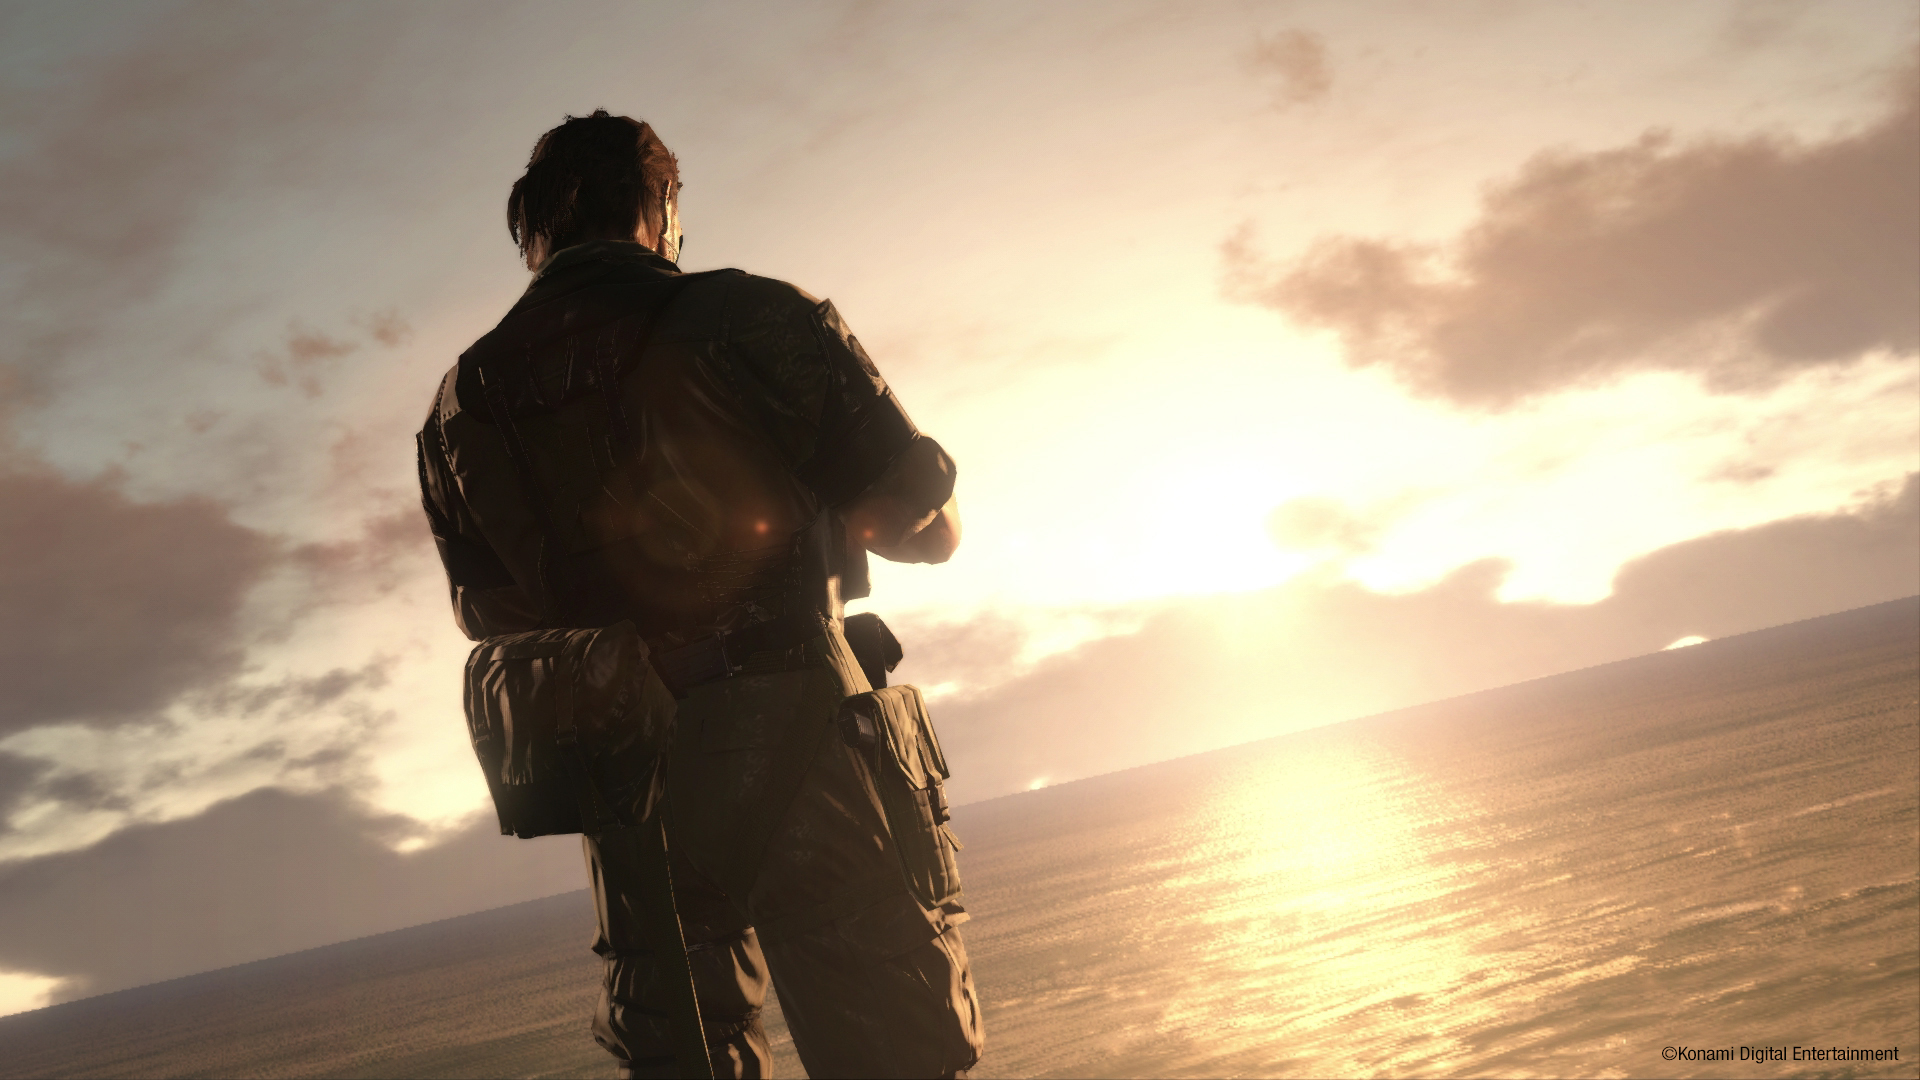 Metal Gear Solid 5: The Phantom Pain graphics comparison